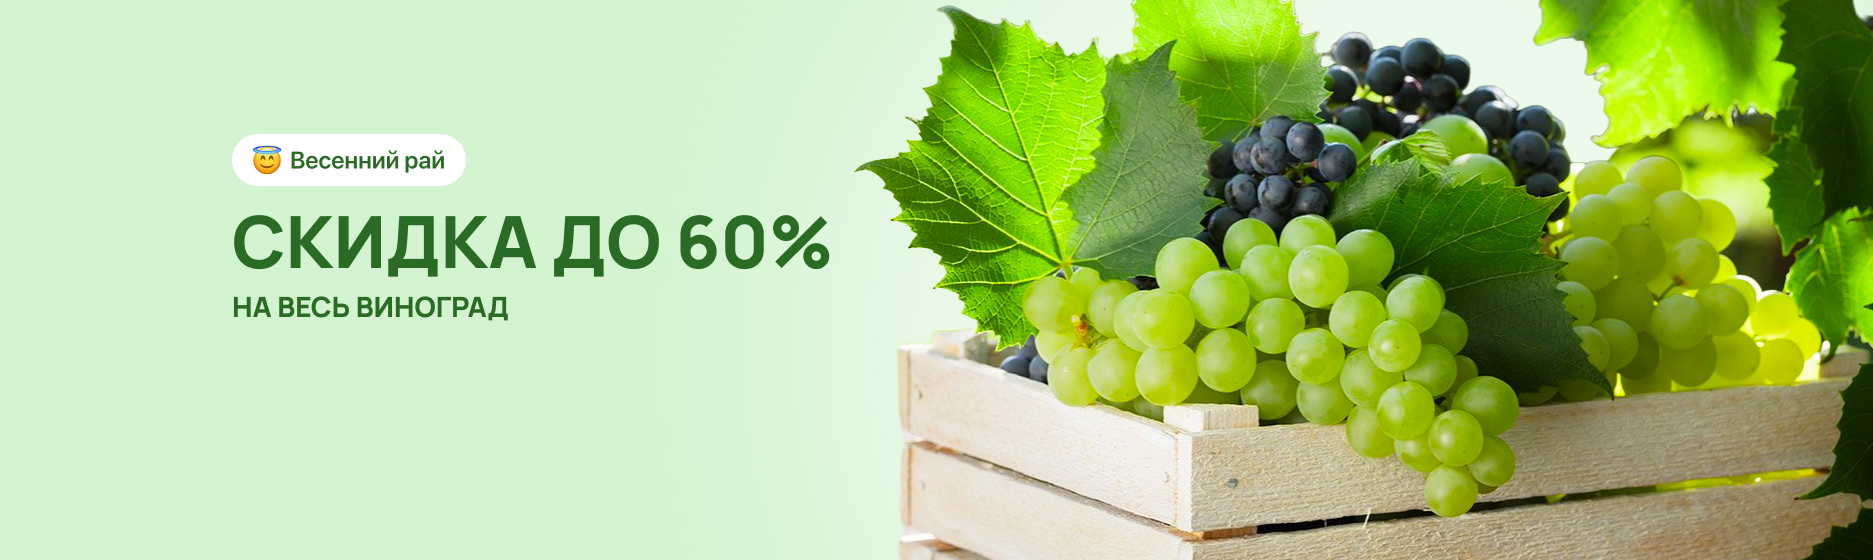 Весь виноград со скидкой до 60%